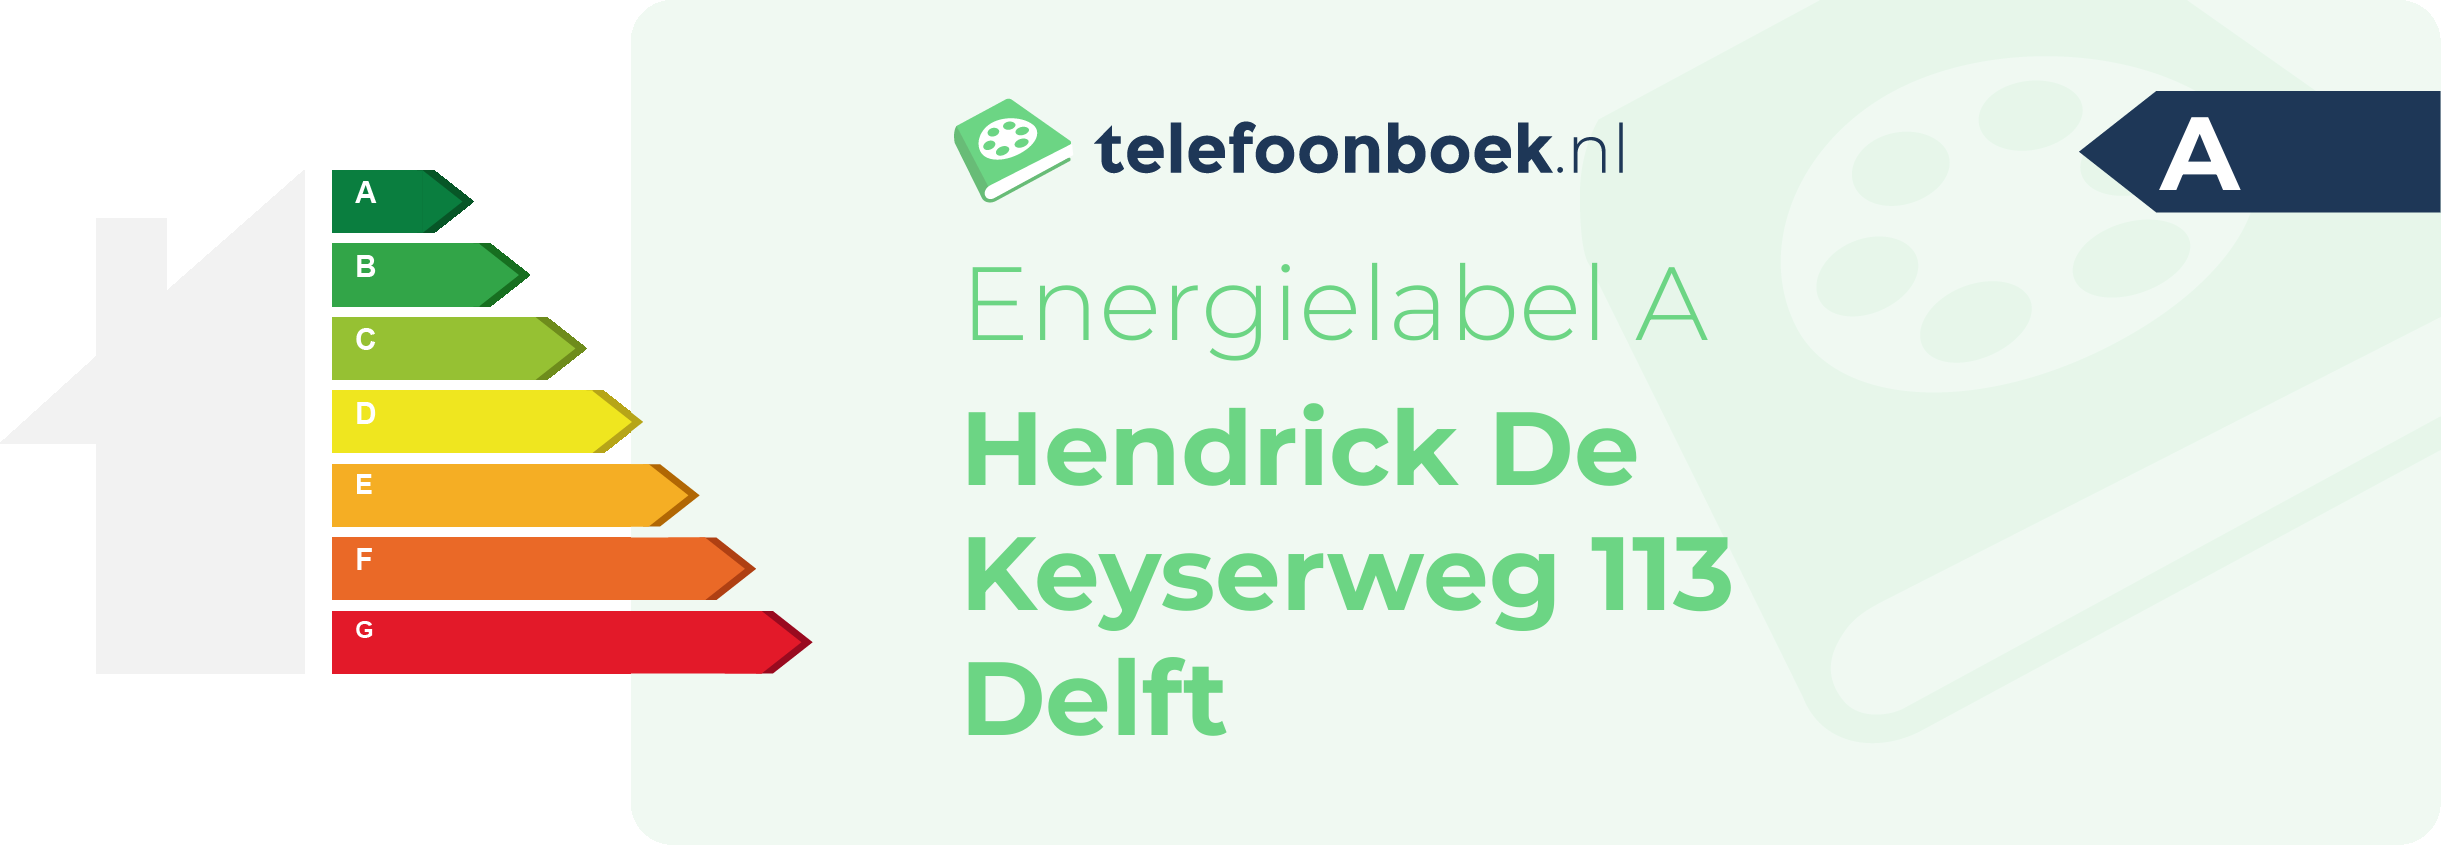 Energielabel Hendrick De Keyserweg 113 Delft